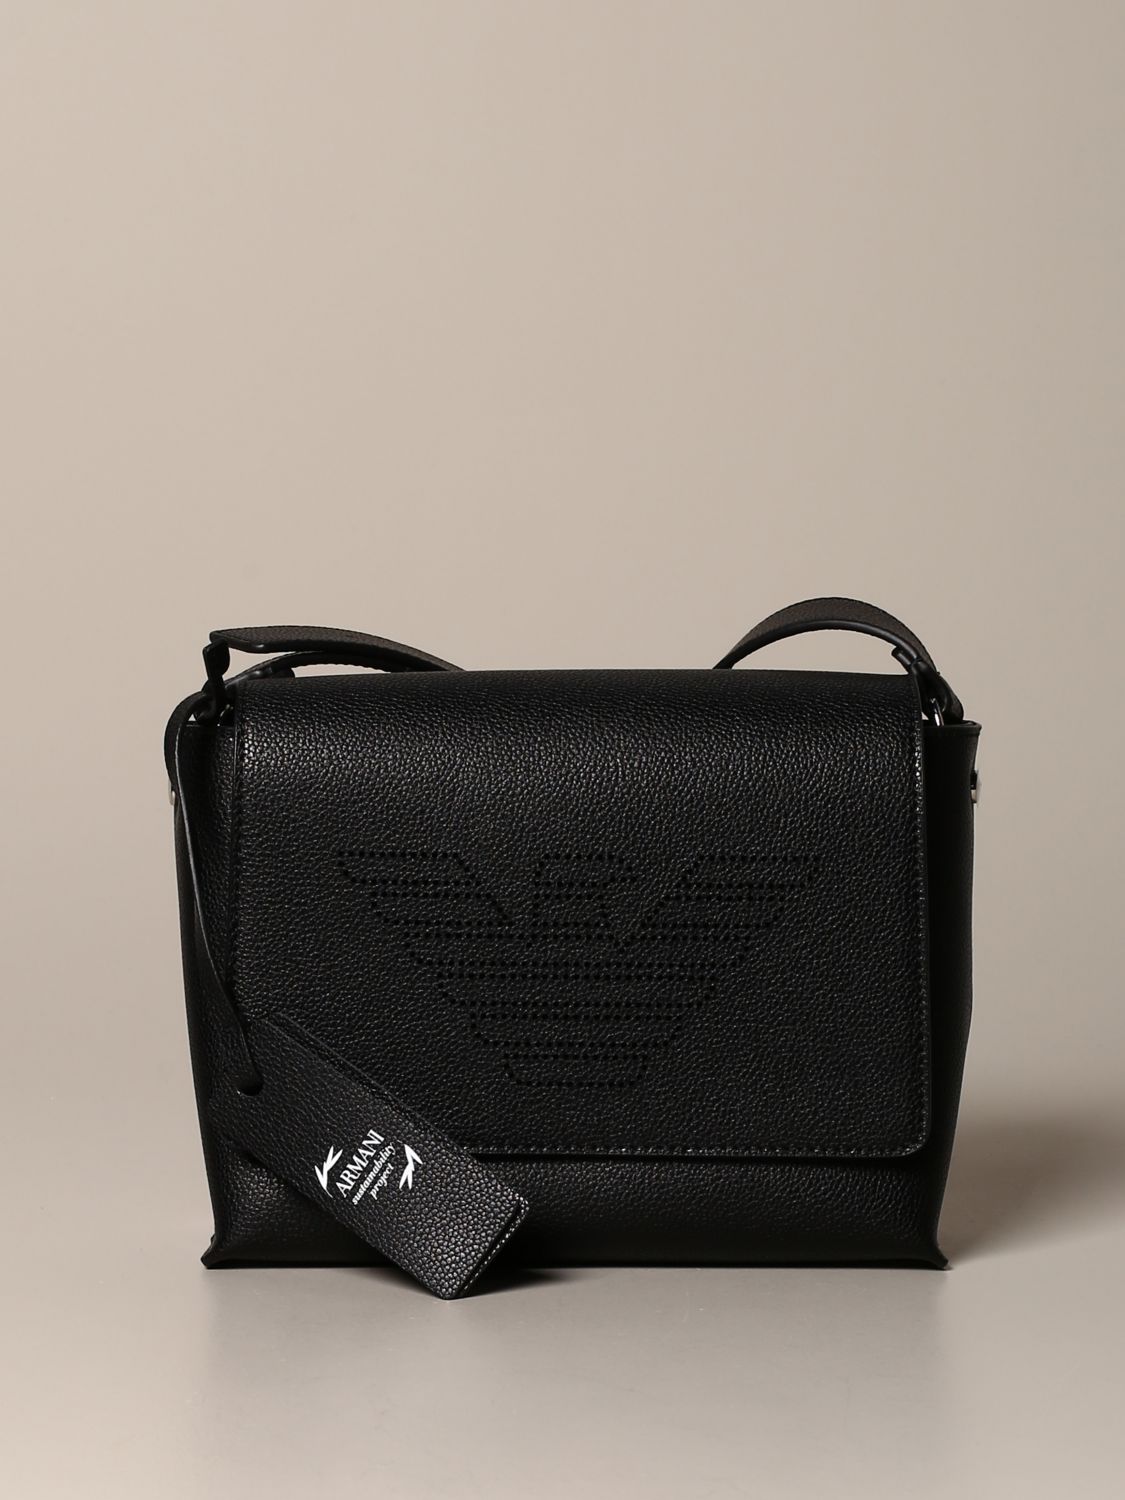 Emporio Armani Outlet: Shoulder bag women - Black | Crossbody Bags ...